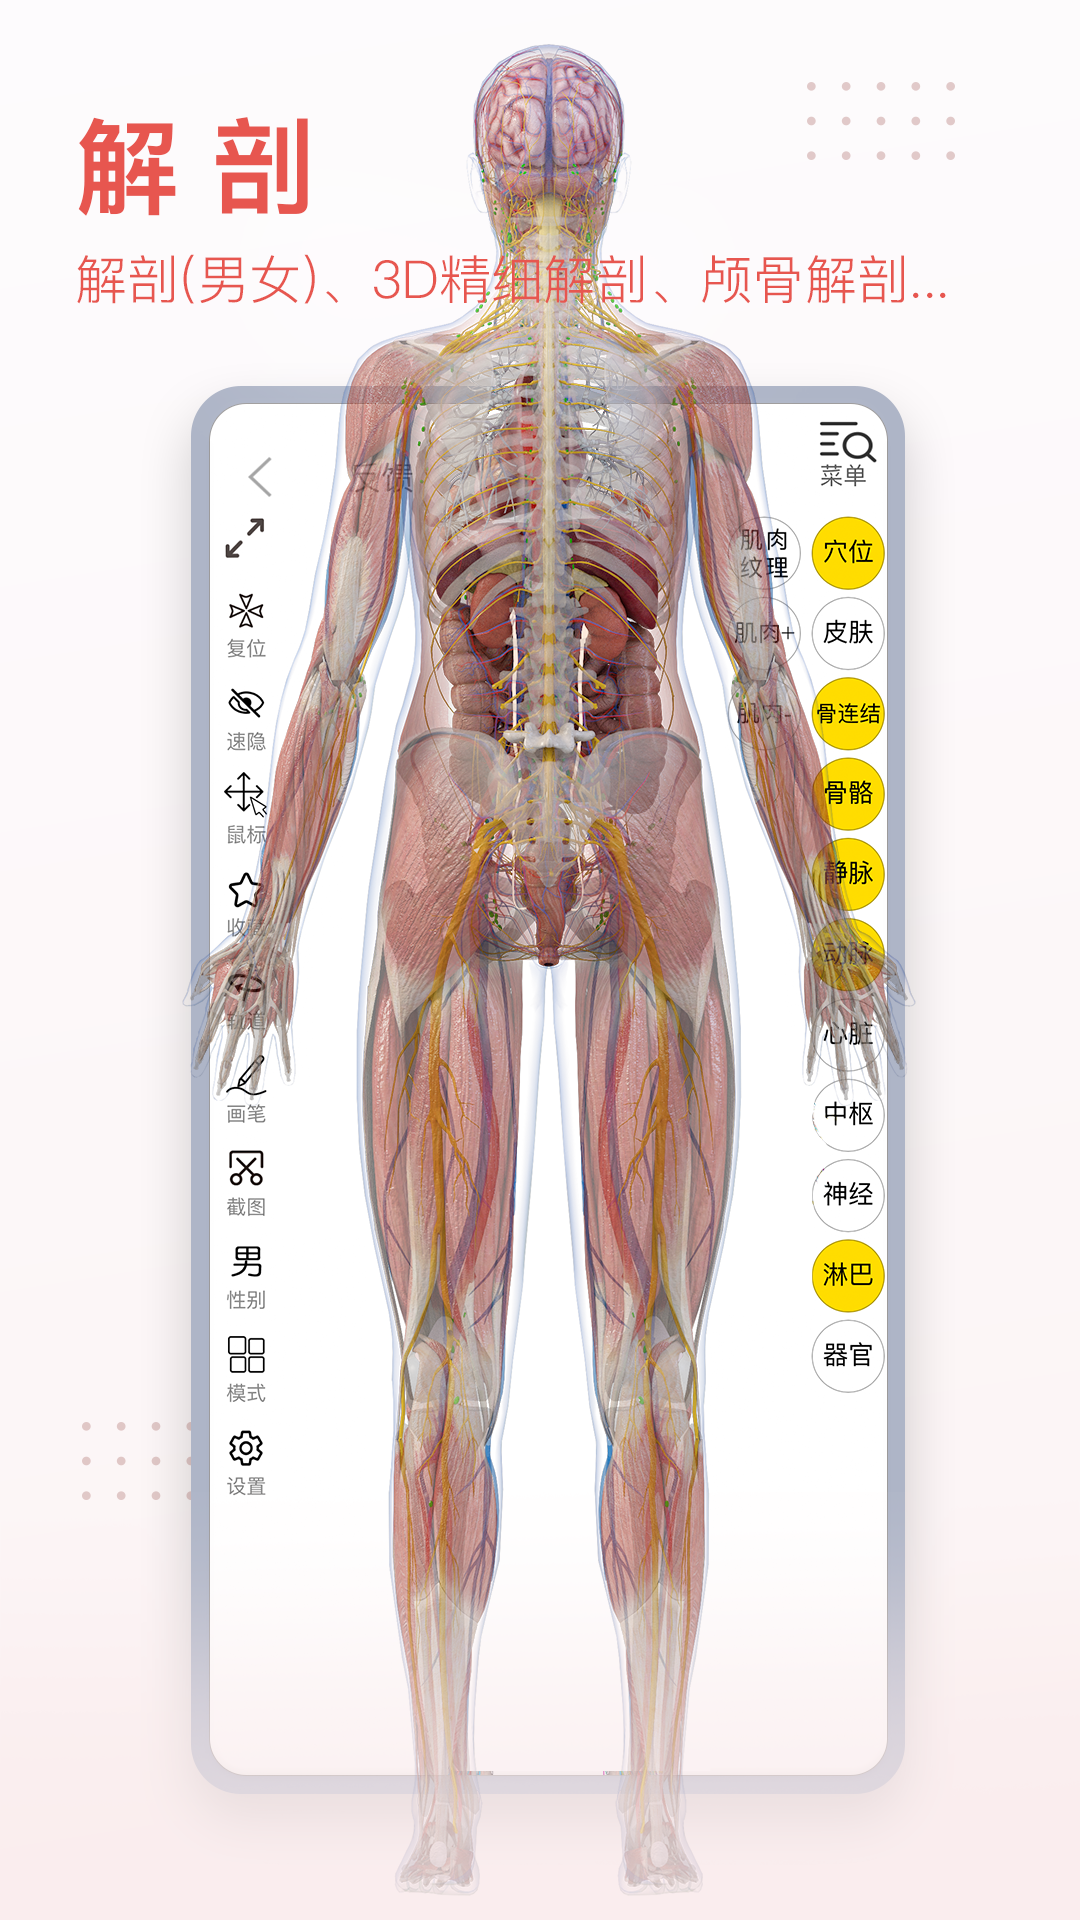 3DBody解剖v8.8.20截图5